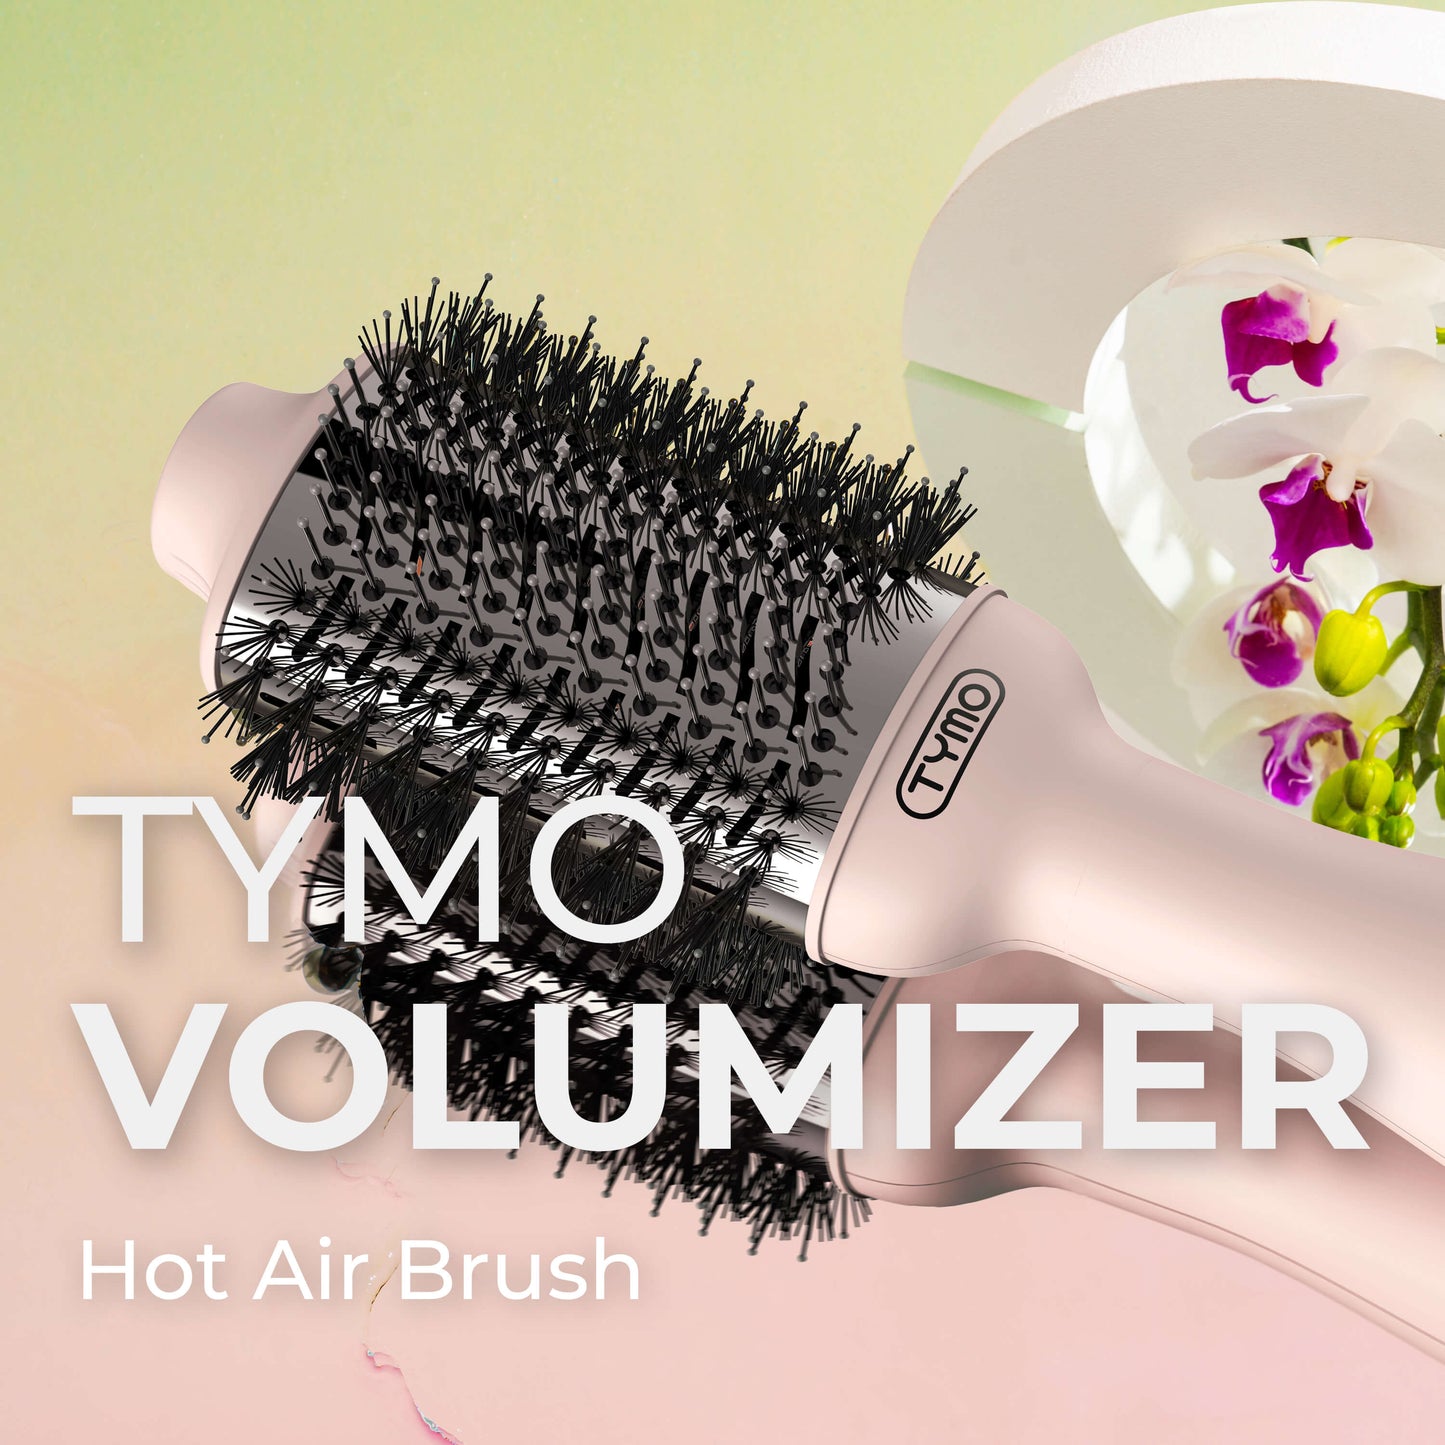 Tymo Volumizer Hair Dryer Brush, Blow Dryer Brush Hot Air Brush in One, Ionic One-Step Hair Dryer and Styler with Titanium Barrel